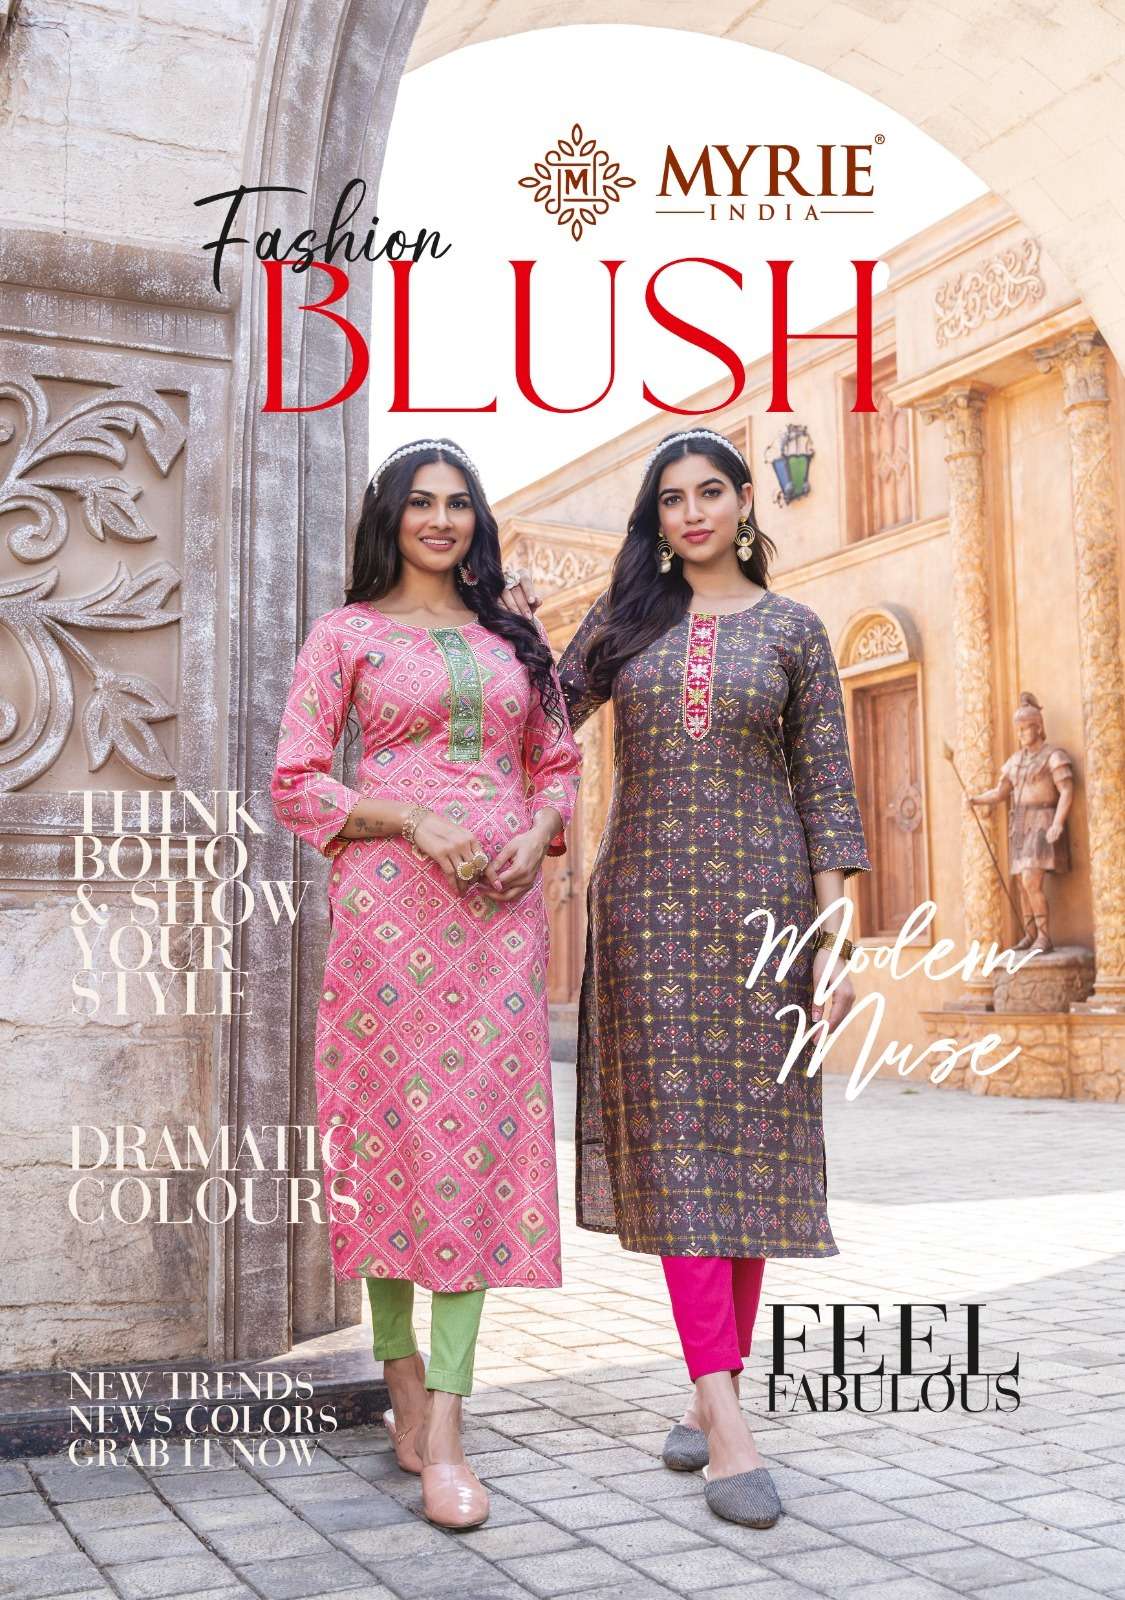 mayree india present fashion blush afforable range adorable printed kurtis catalog